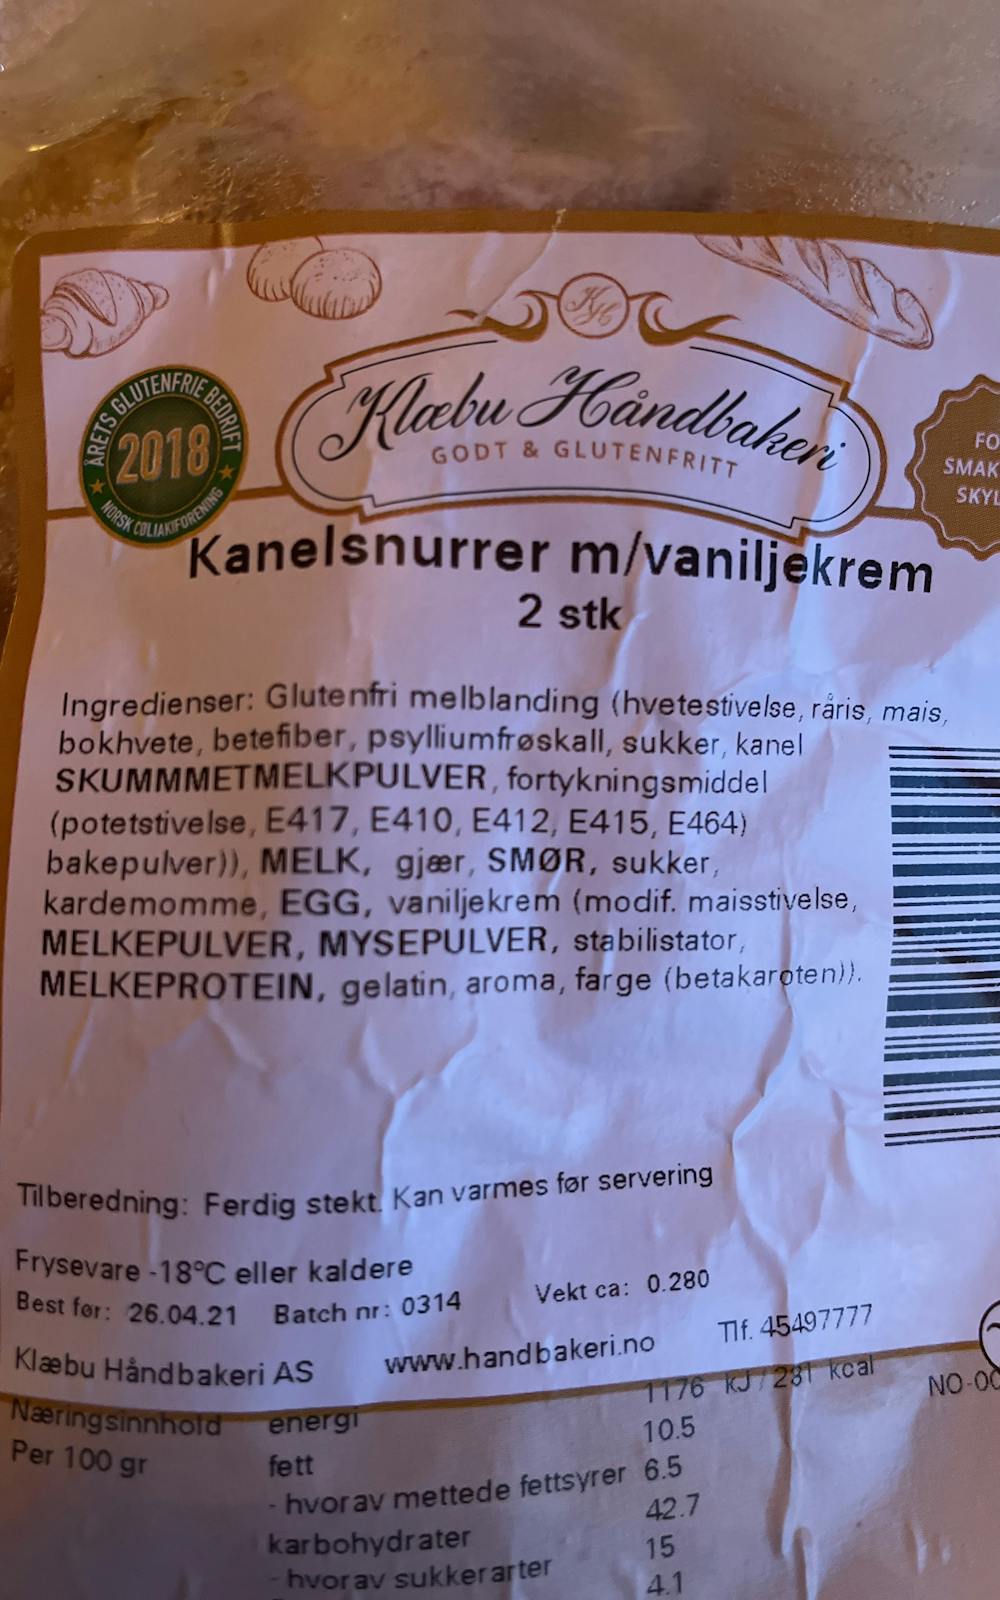 Ingredienslisten til Klæbu håndbakeri Kanelsnurrer m/ vaniljekrem